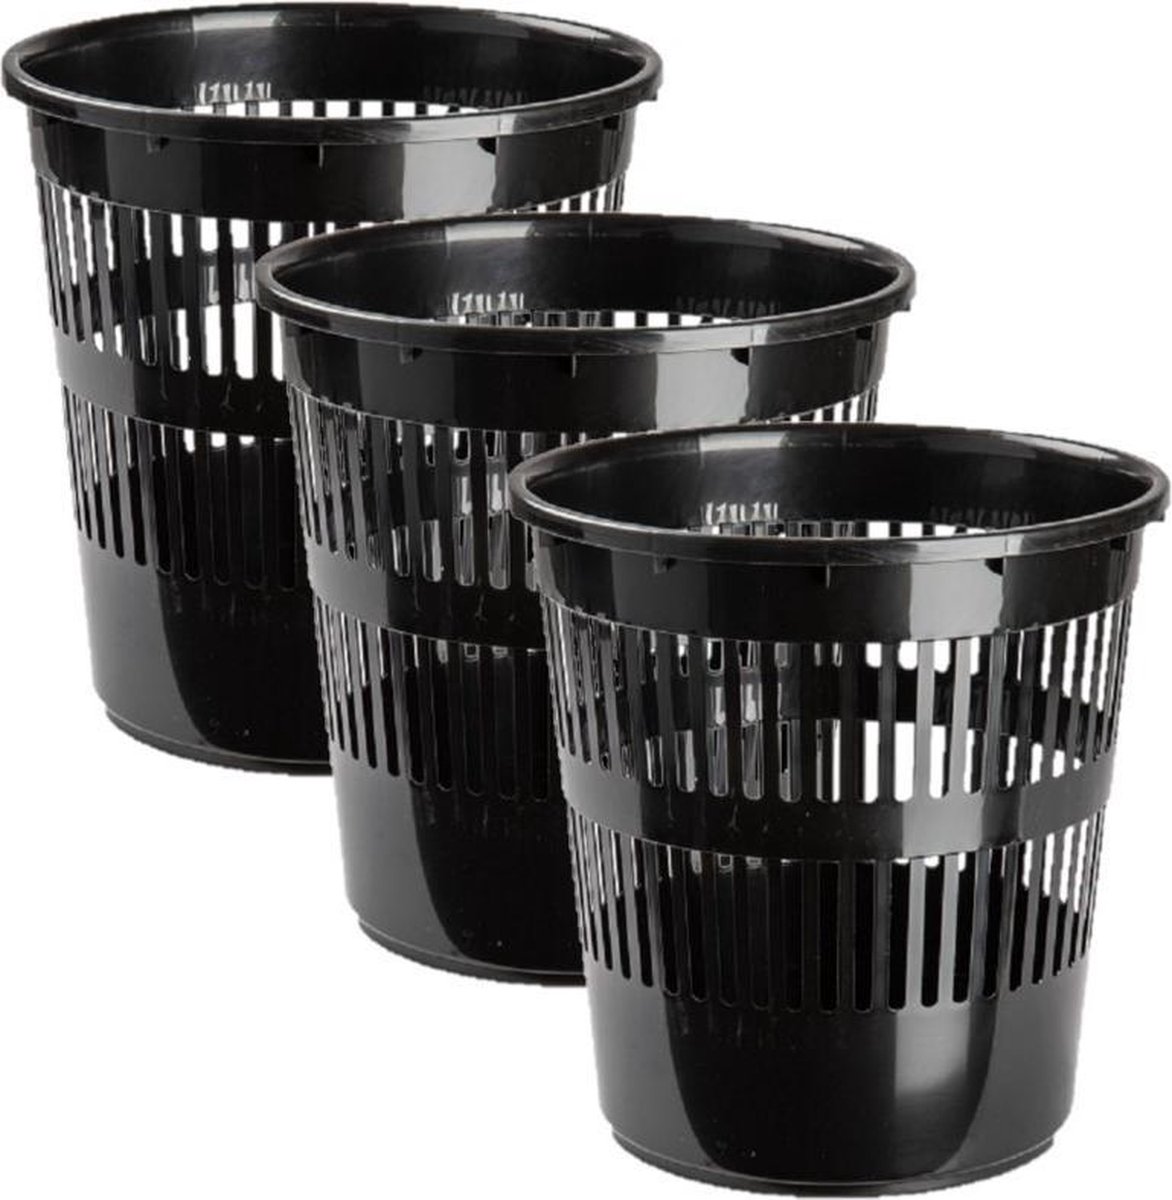 3x stuks afvalbakken/vuilnisbakken plastic zwart 28 cm - Vuilnisbak/prullenbakken/papiermand - Kantoor/keuken/slaapkamer